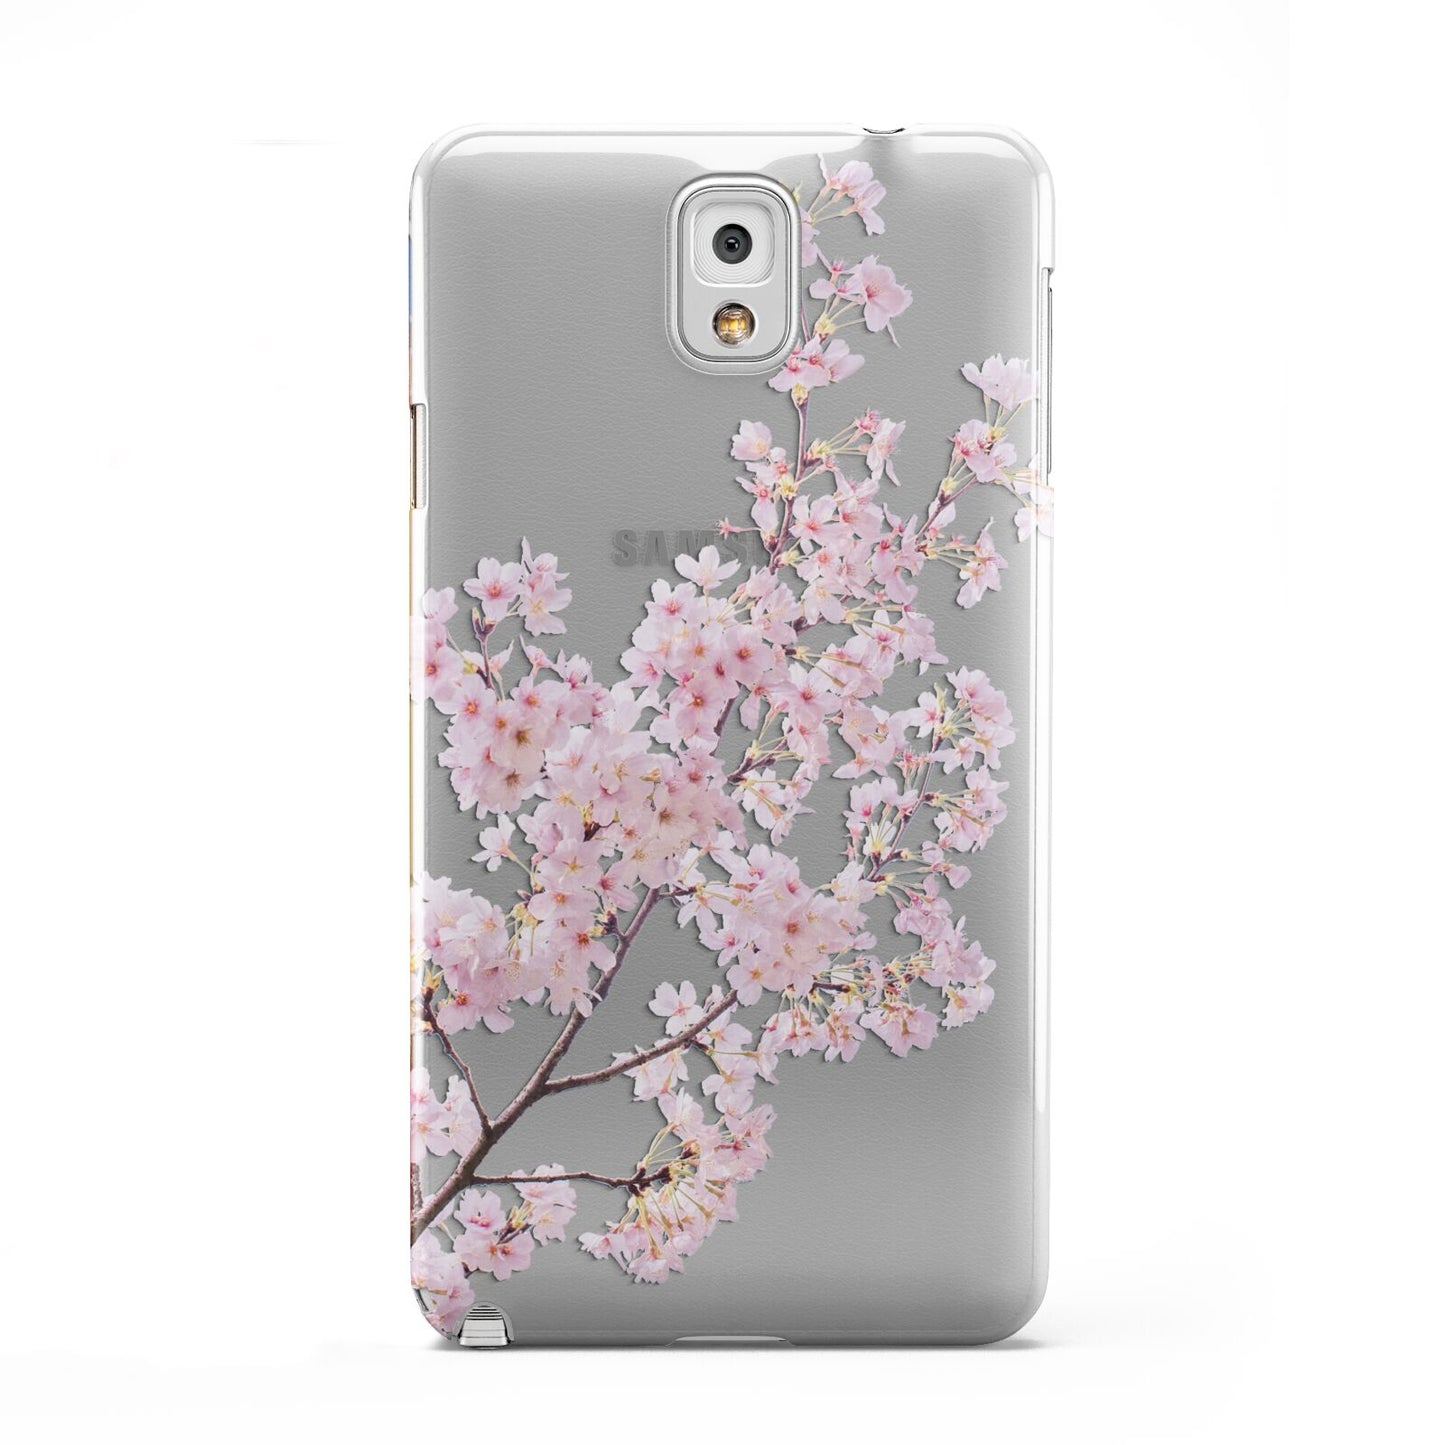 Blossom Tree Samsung Galaxy Note 3 Case